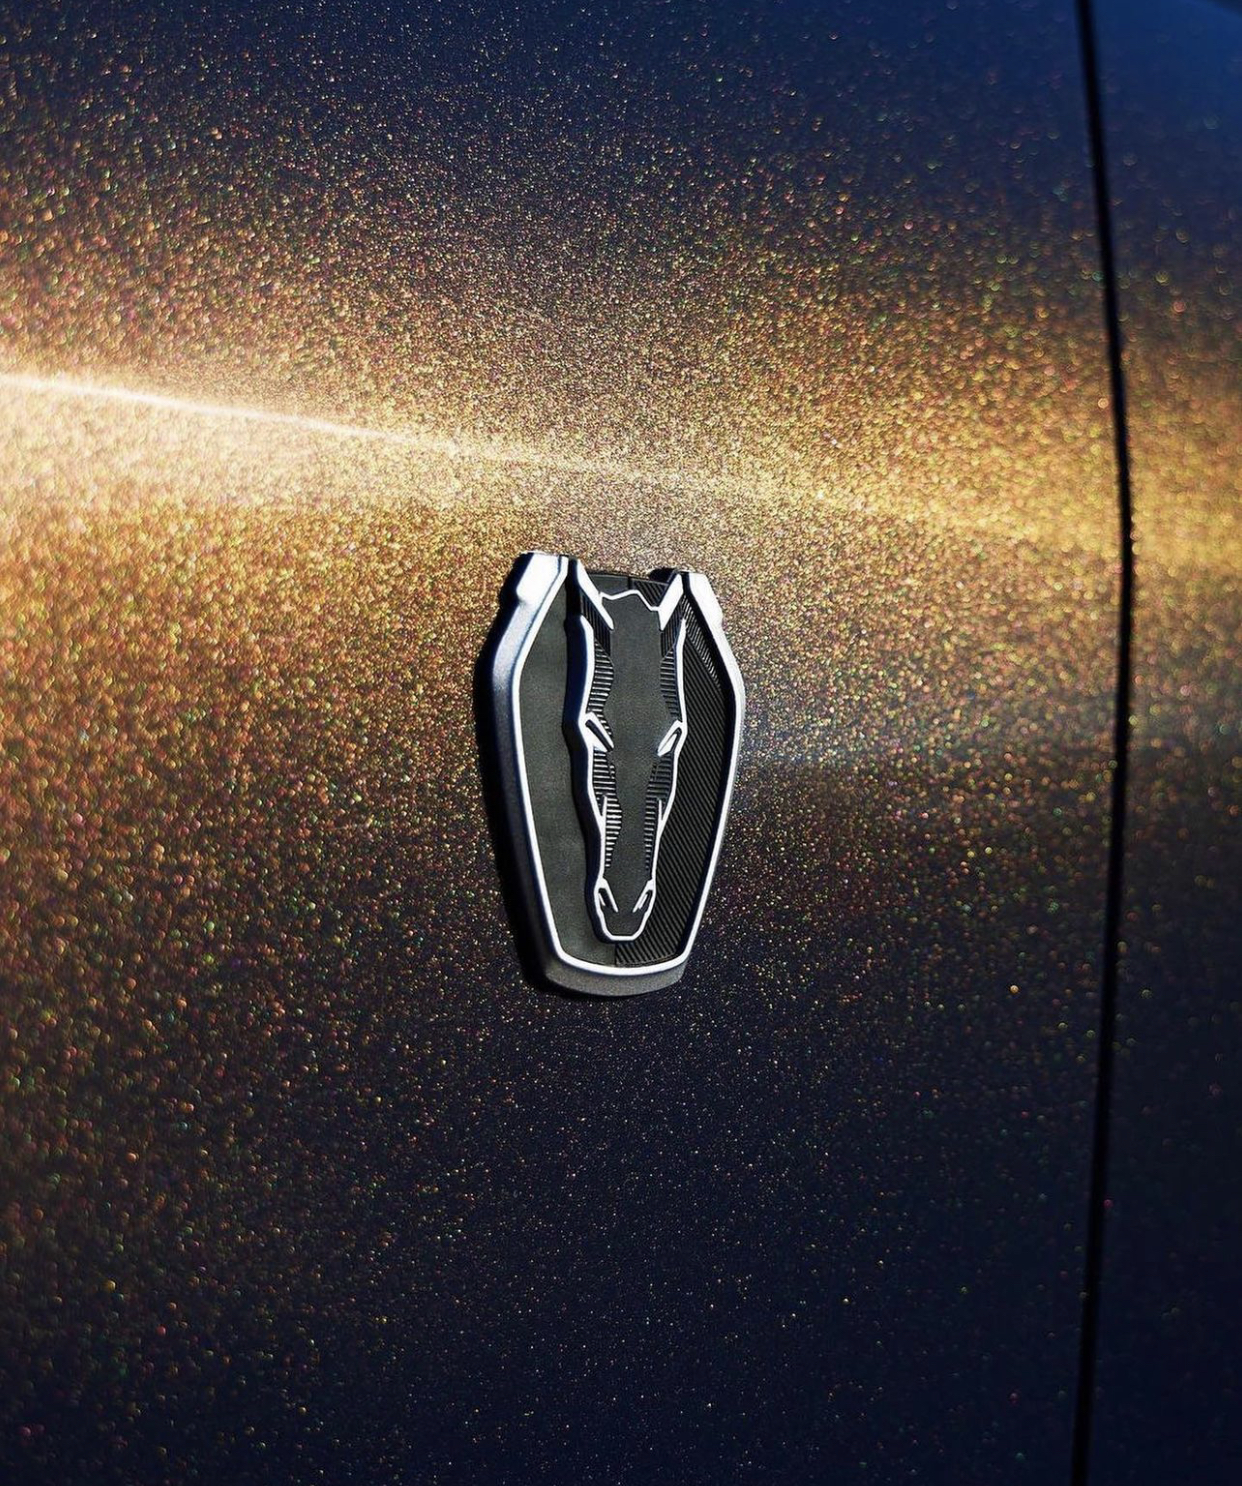 S650 Mustang Hmm… Dark Horse emblem? IMG_5977